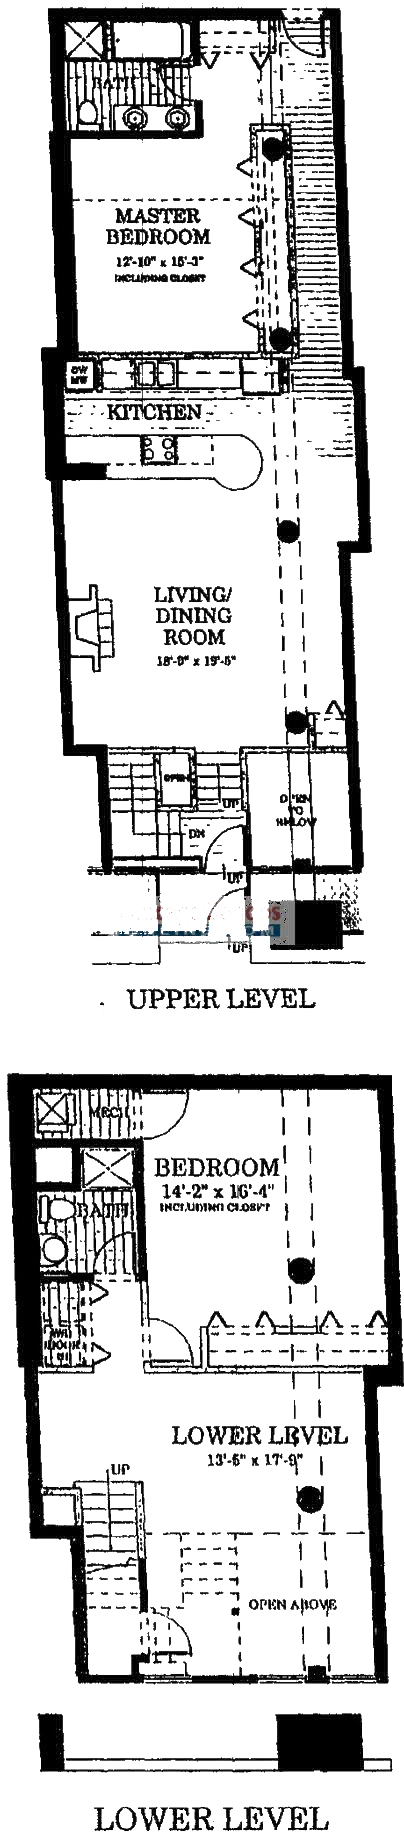 728 W Jackson Floorplan - 102 Duplex Tier*